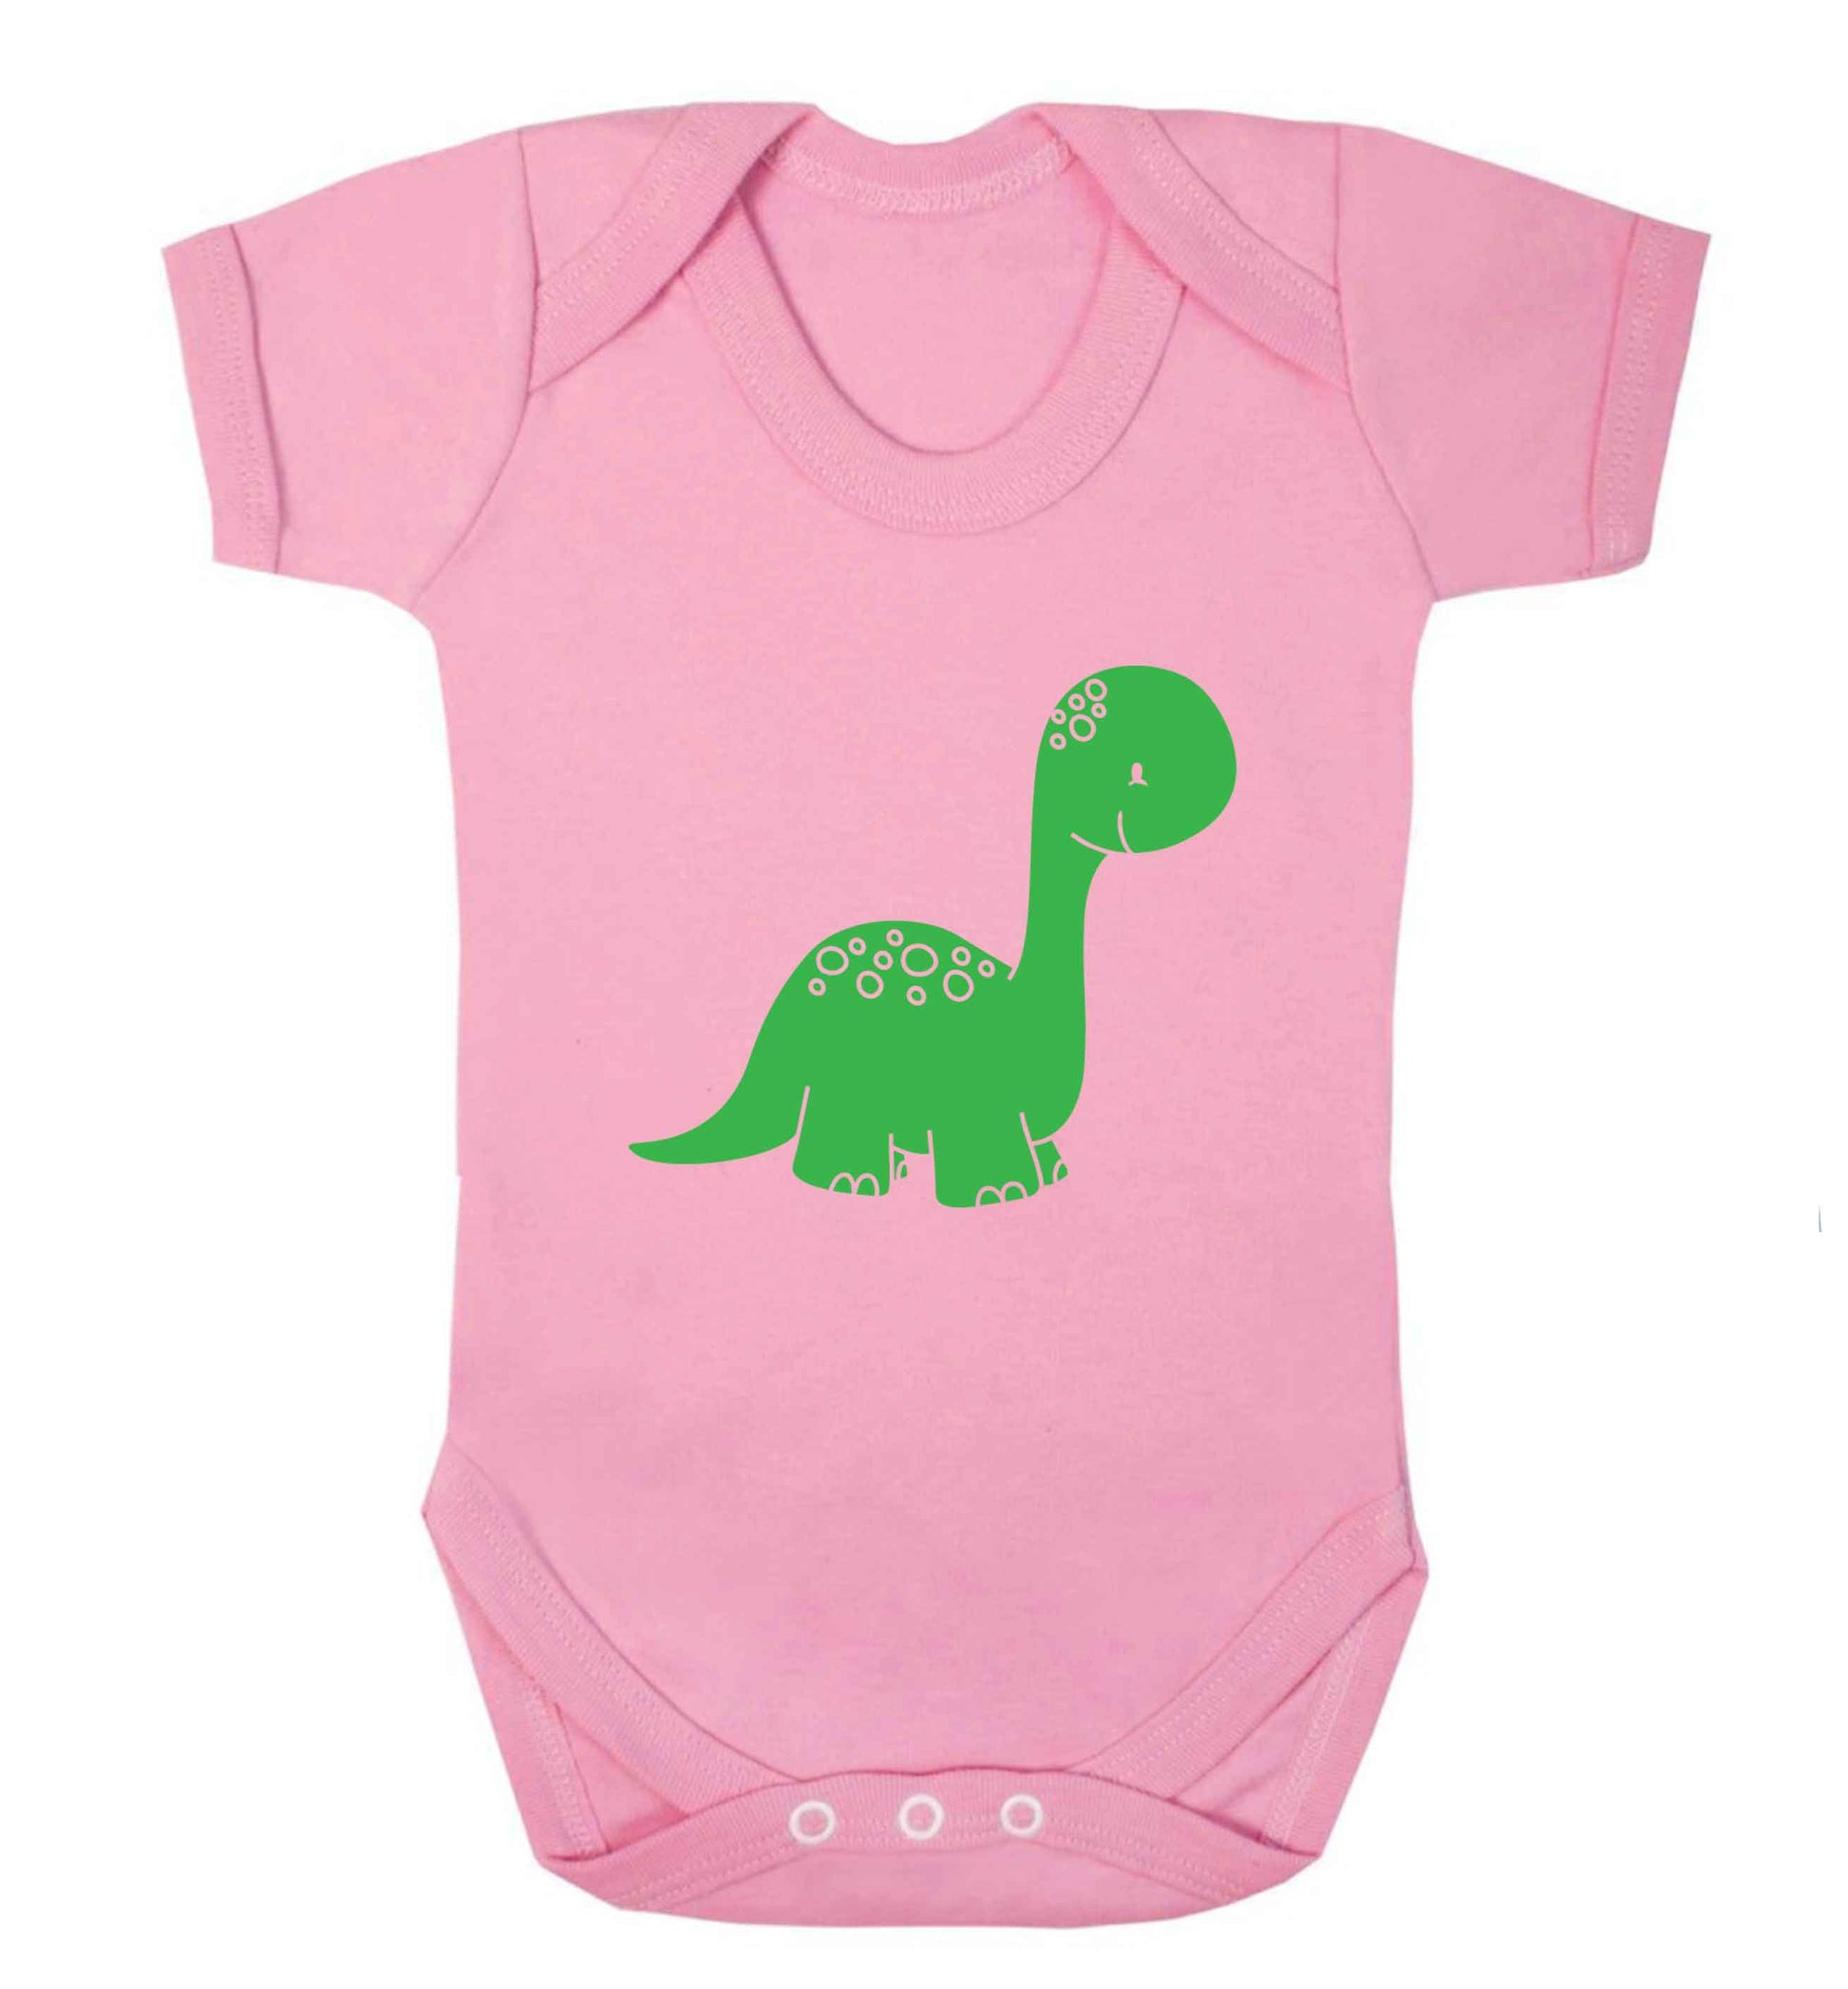 Dinosaur illustration baby vest pale pink 18-24 months